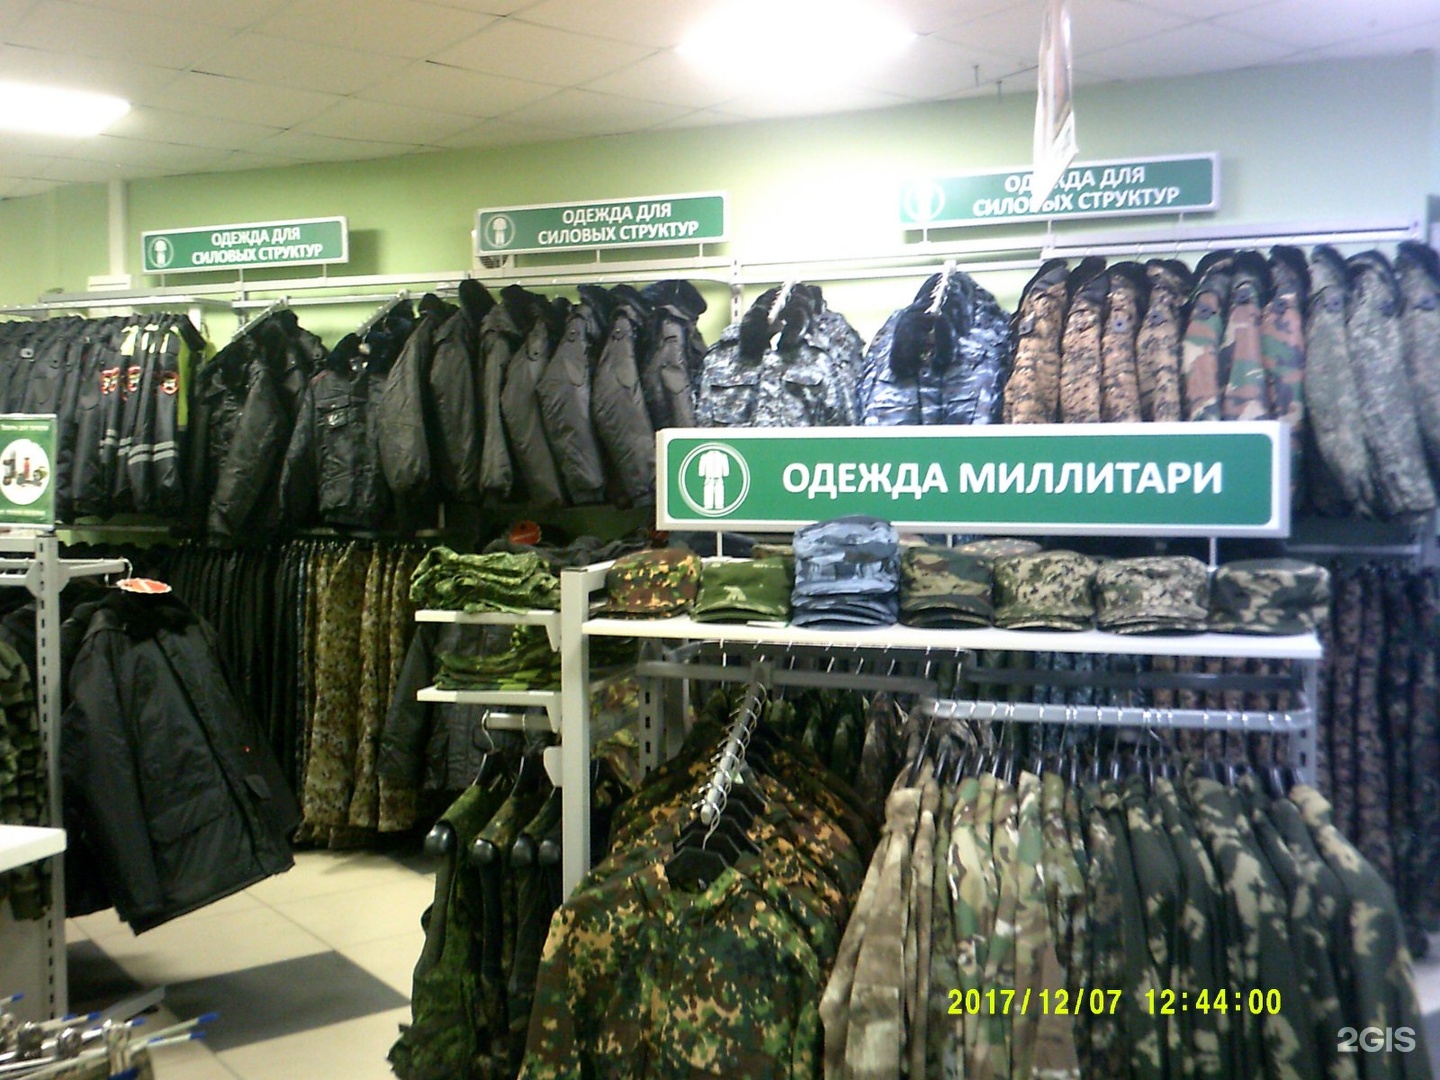 Блок Пост Интернет Магазин Екатеринбург